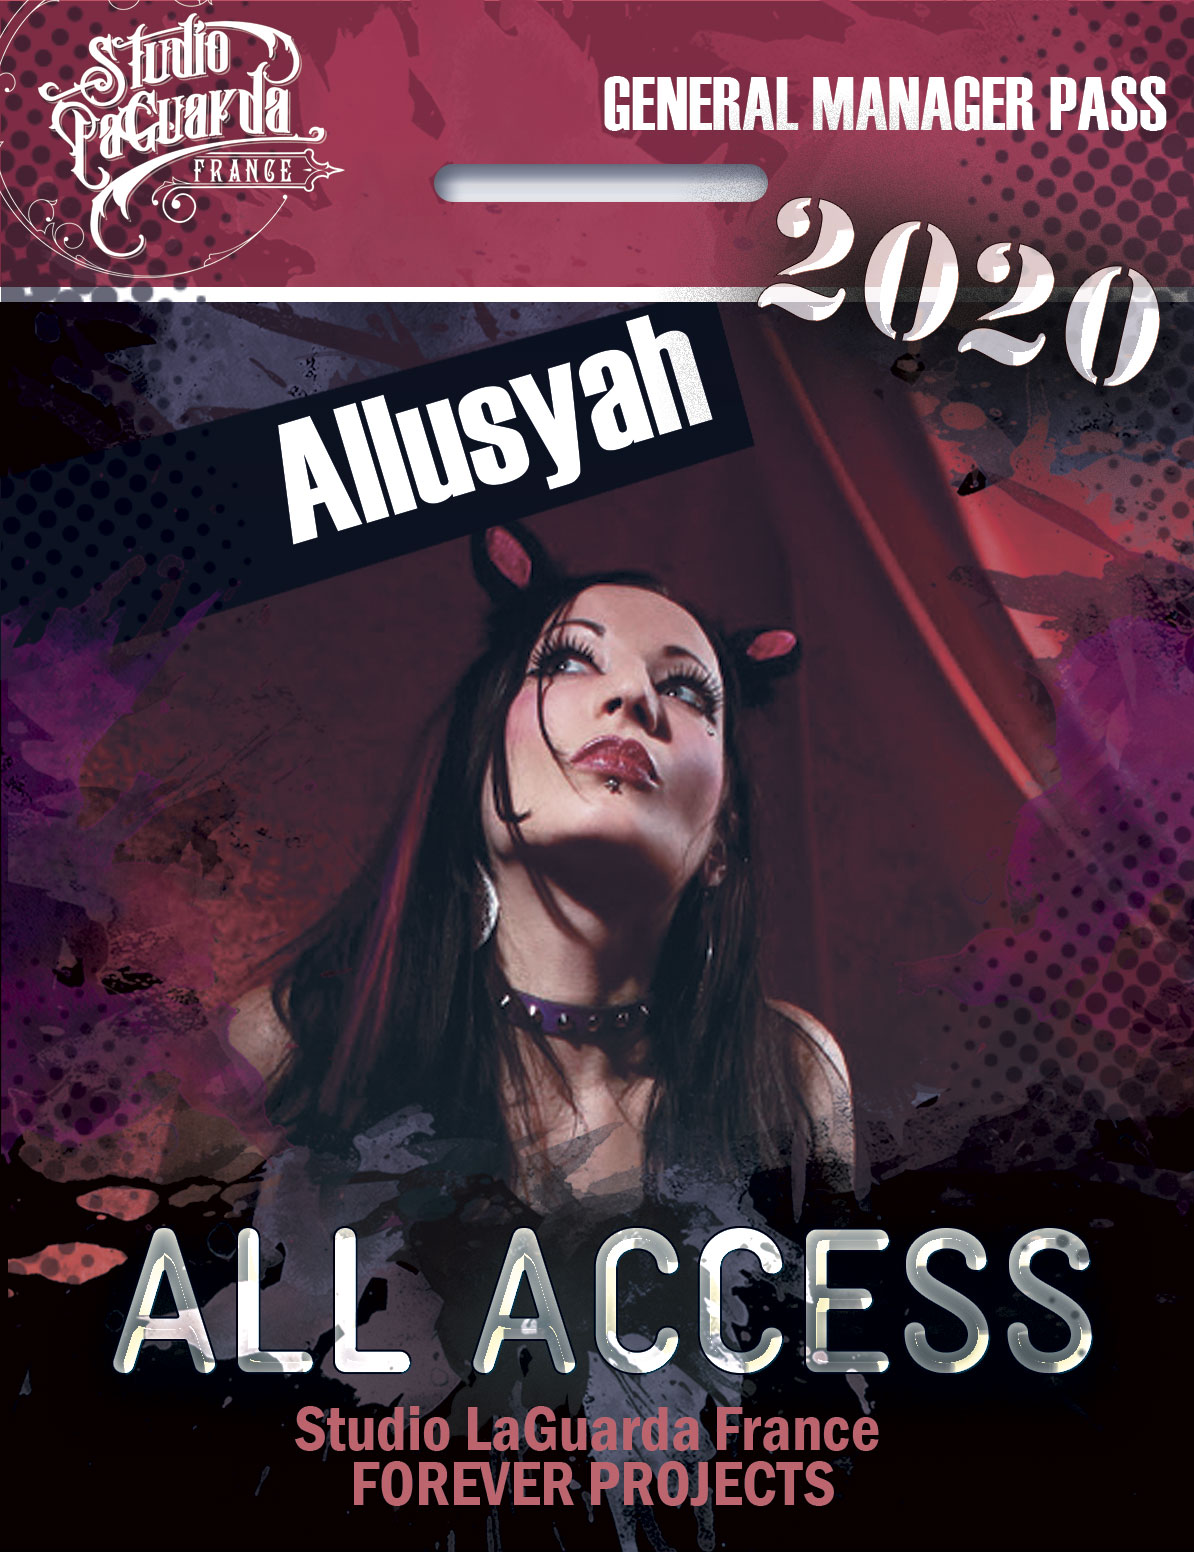 AllusyahPass2020.jpg